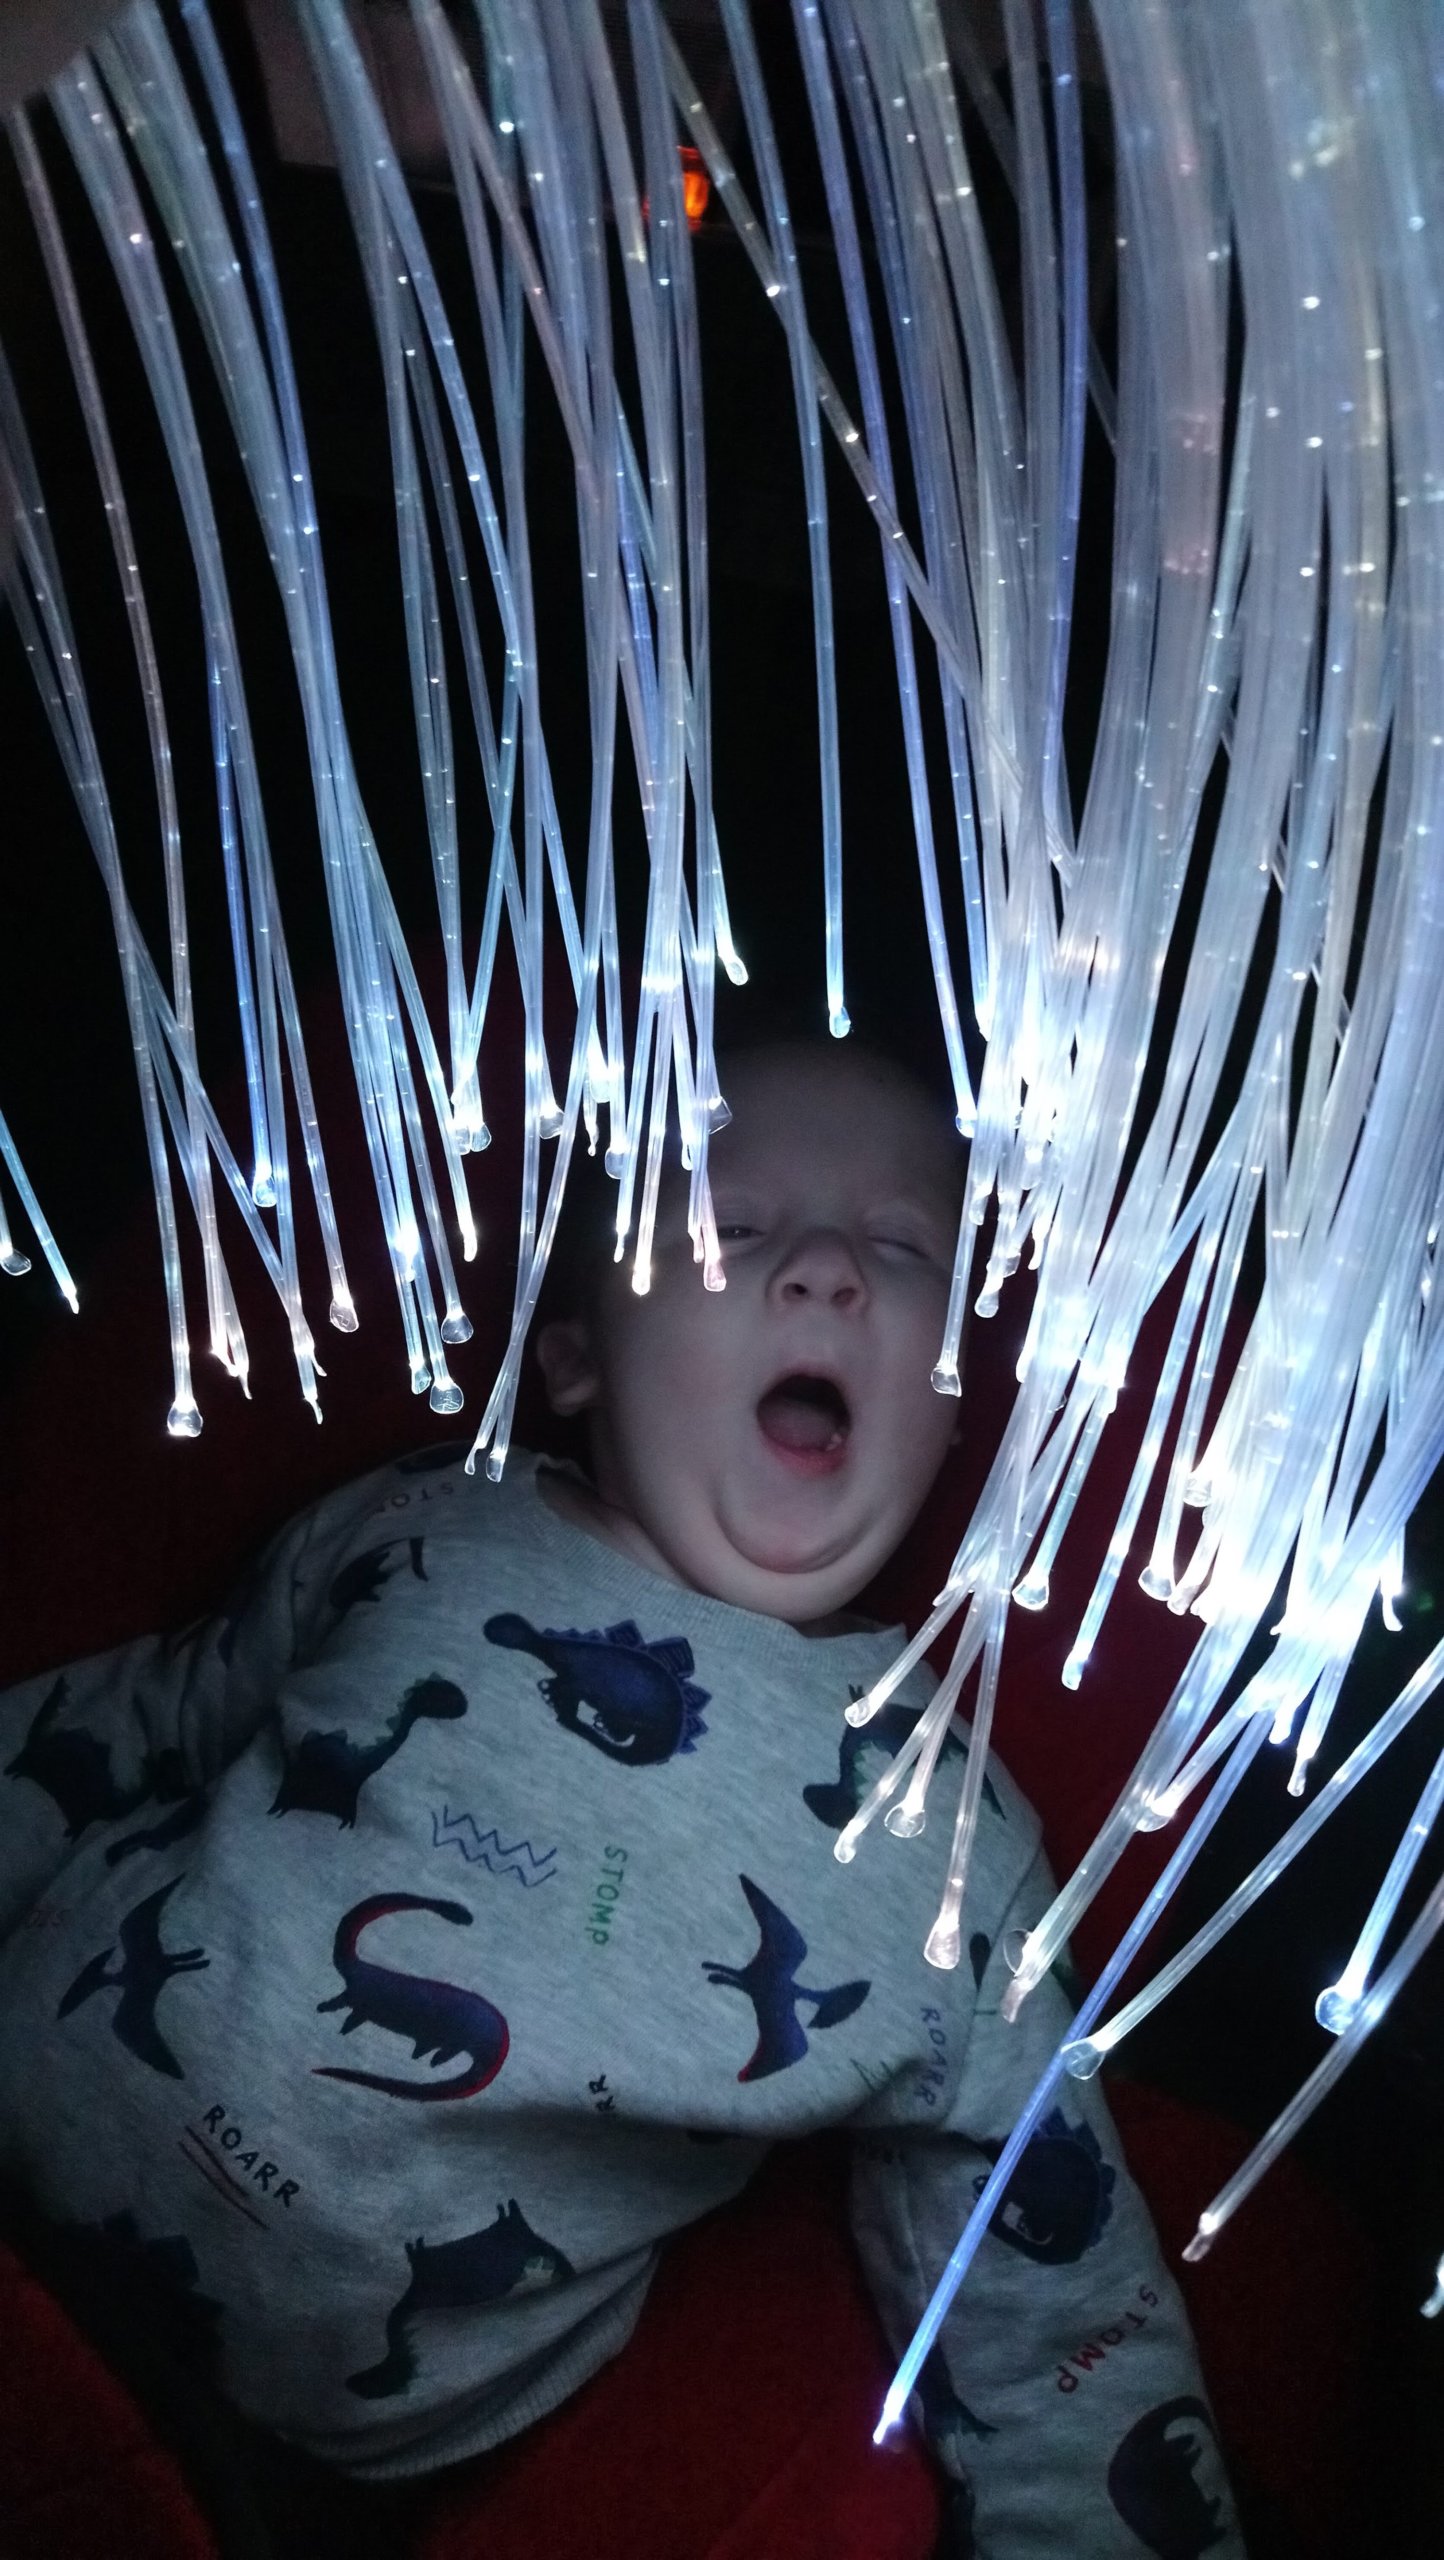 Evan yawning while looking at white fibre optic lights